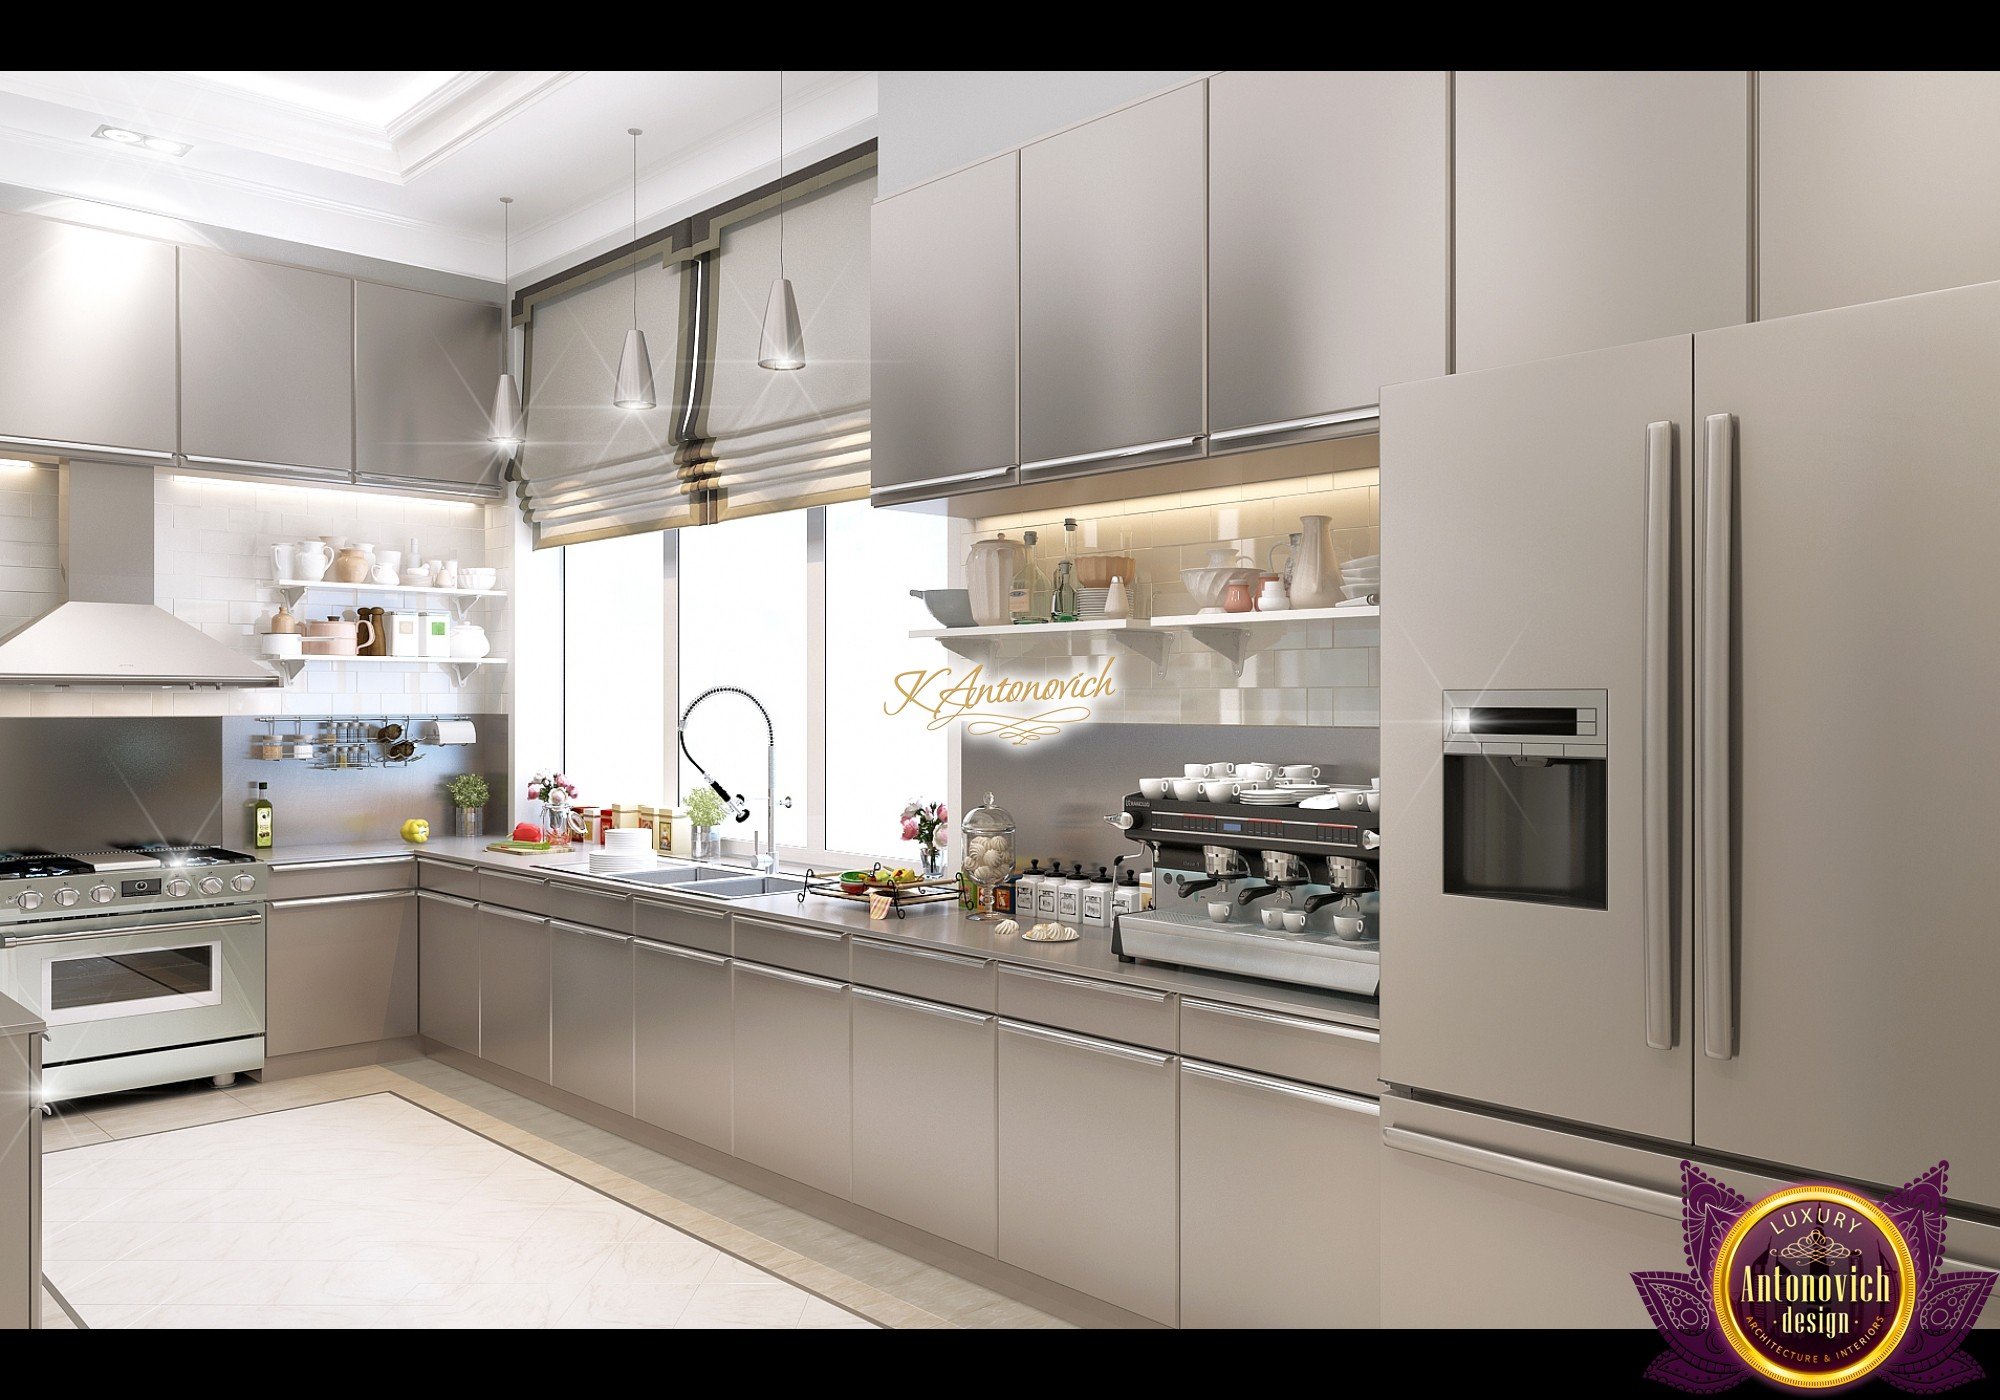 kitchen design pros renovation brands